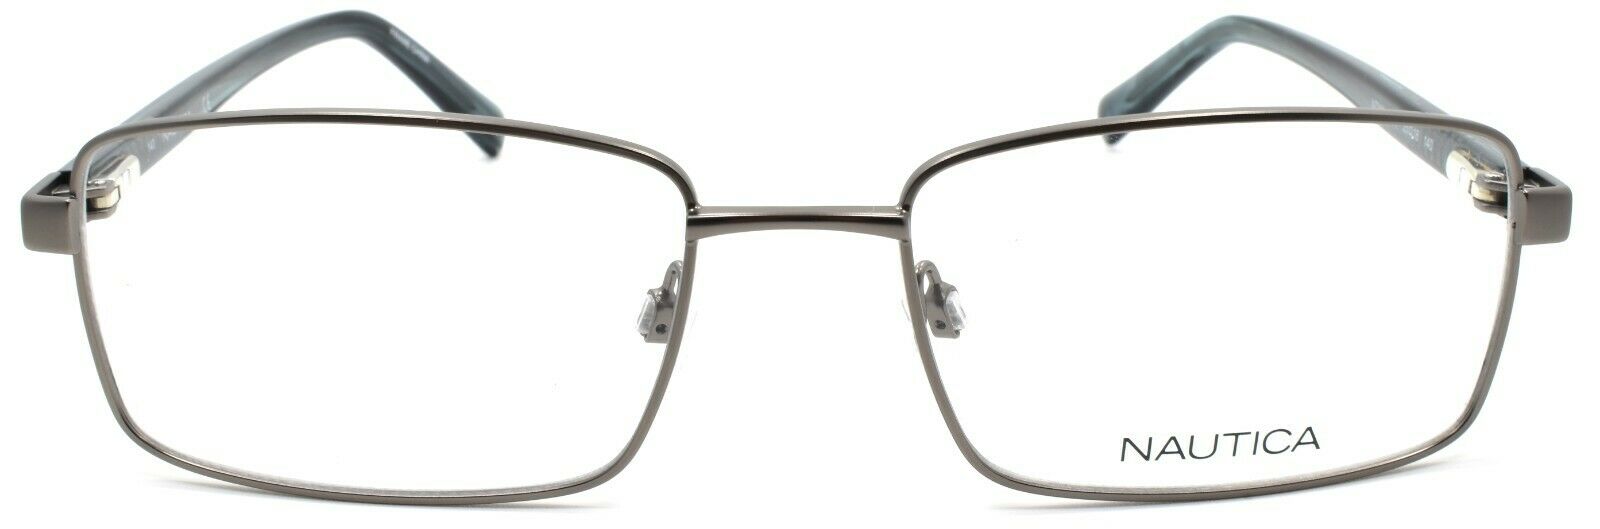 2-Nautica N7300 030 Men's Eyeglasses Frames 55-18-140 Satin Gunmetal-688940462982-IKSpecs